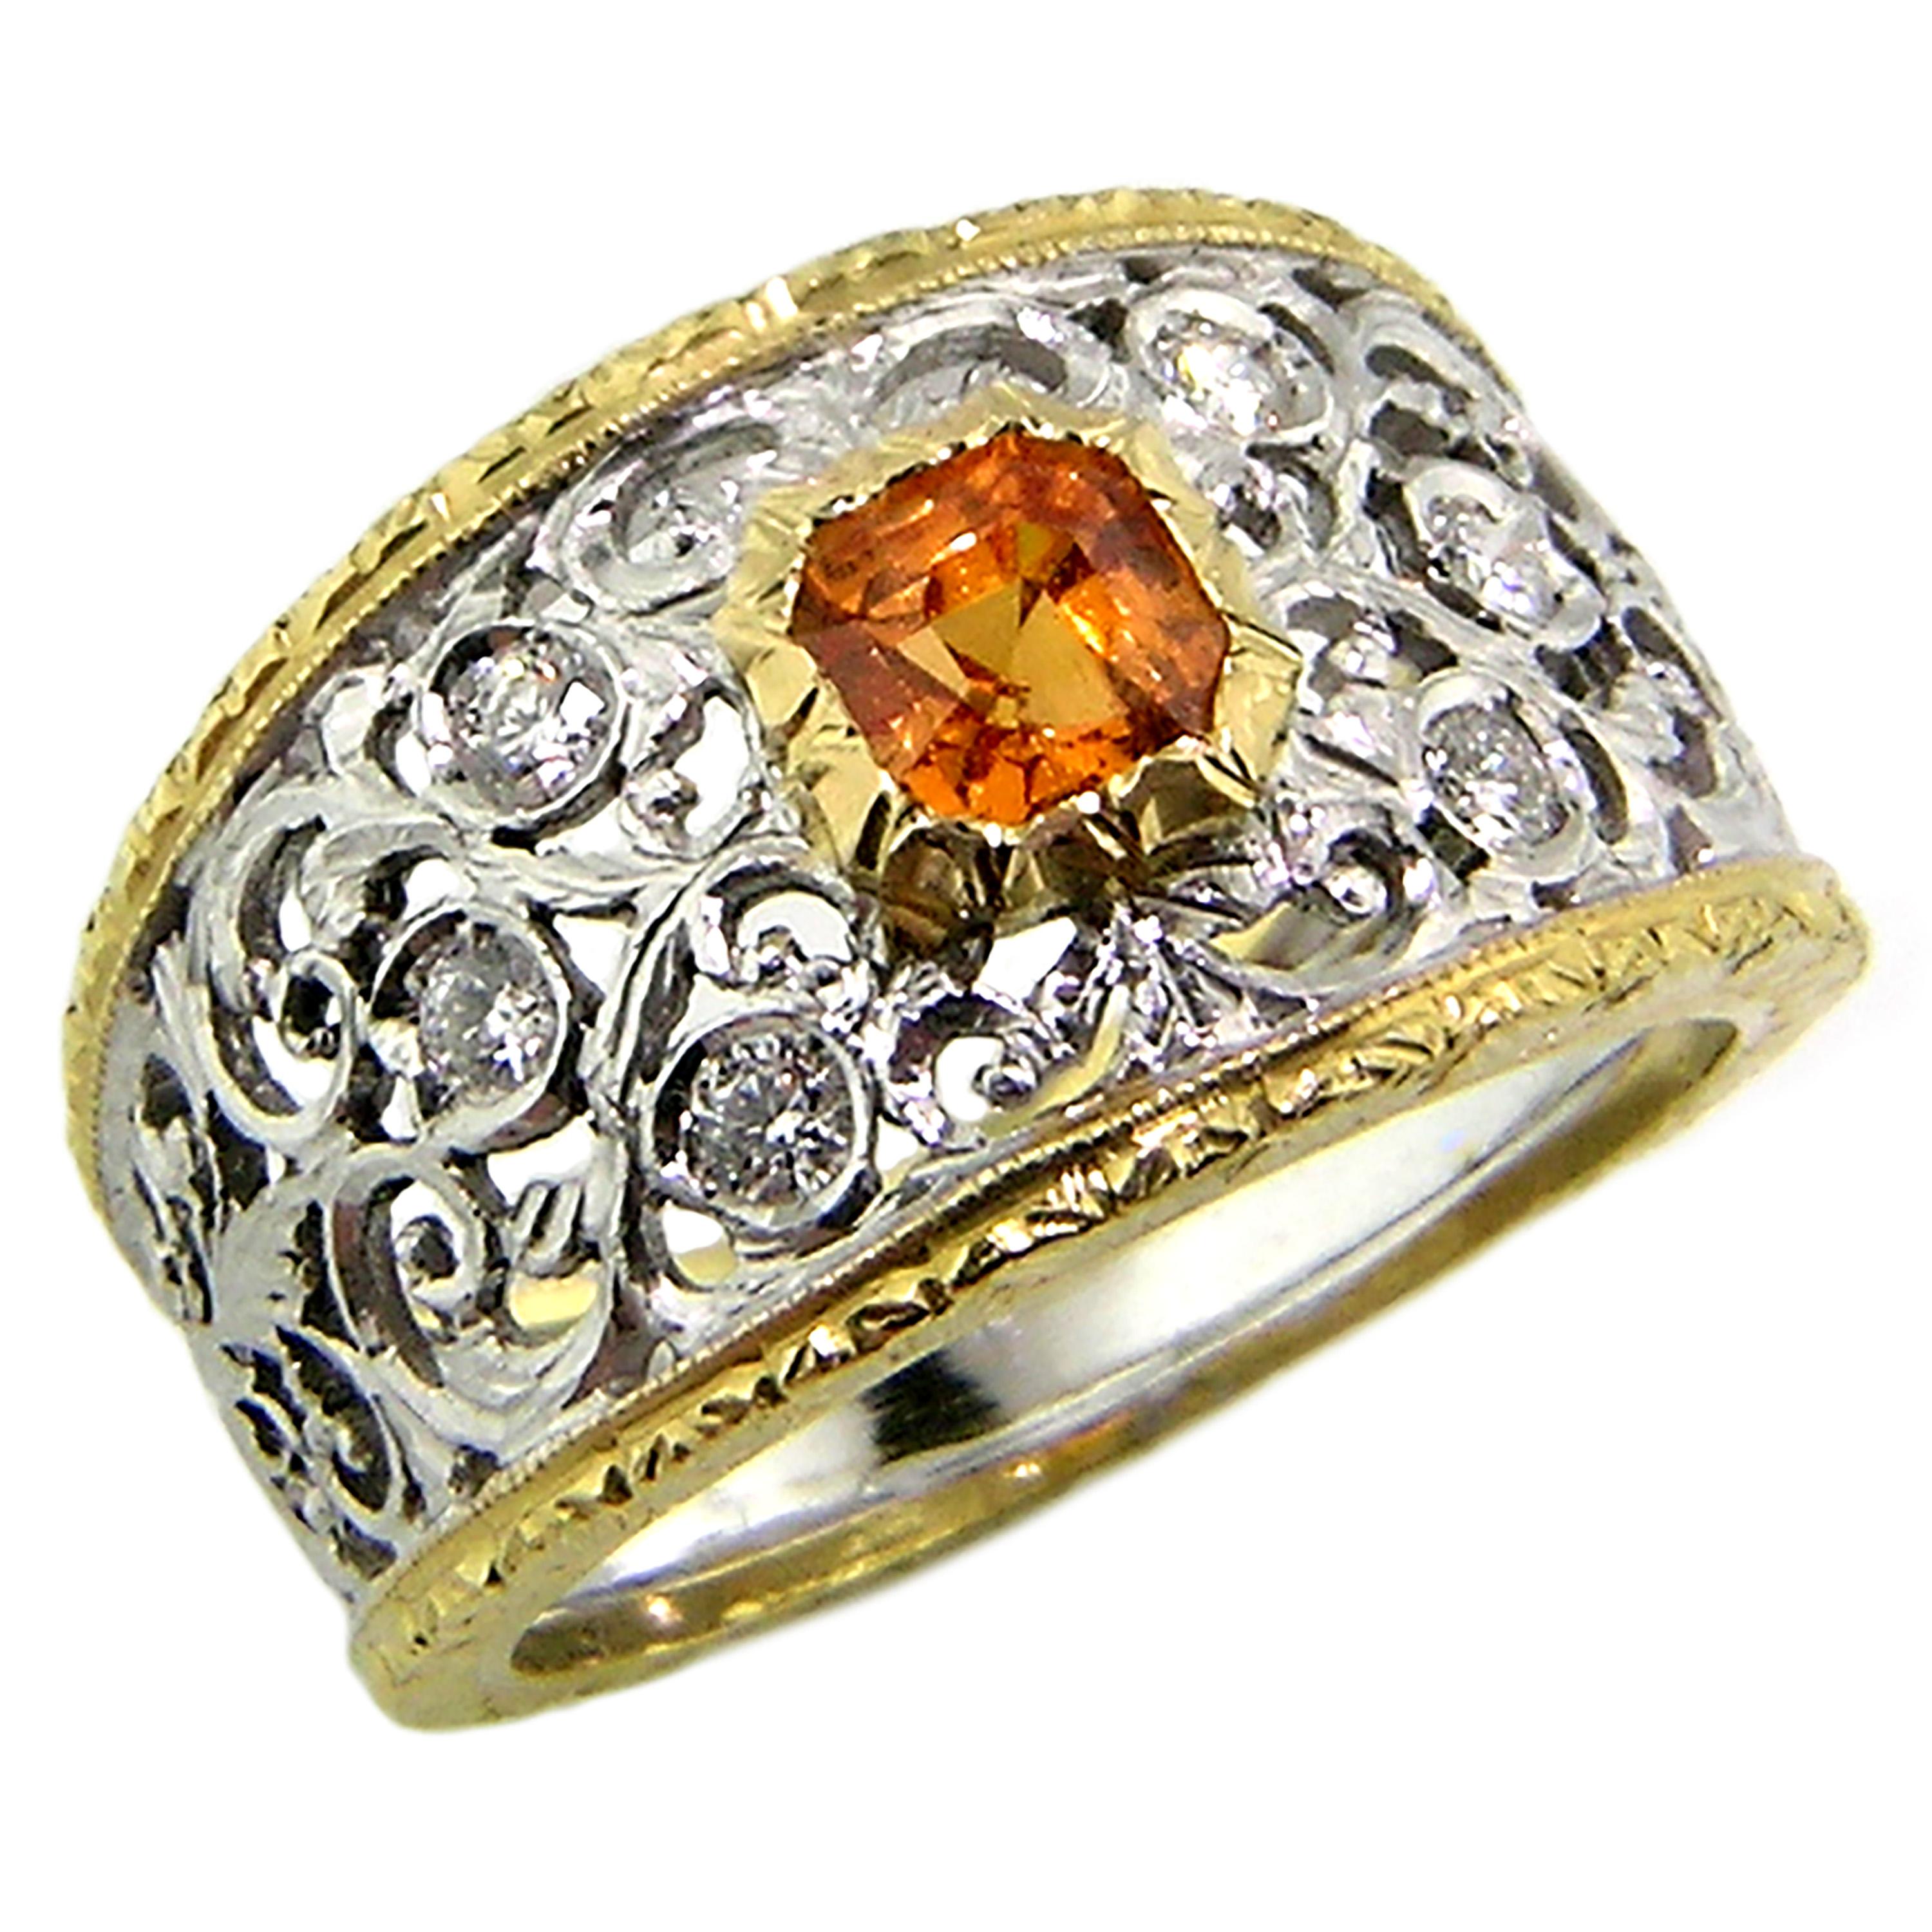 Cynthia Scott Mandarin Garnet and Diamond 18kt Ring, Made in Italy